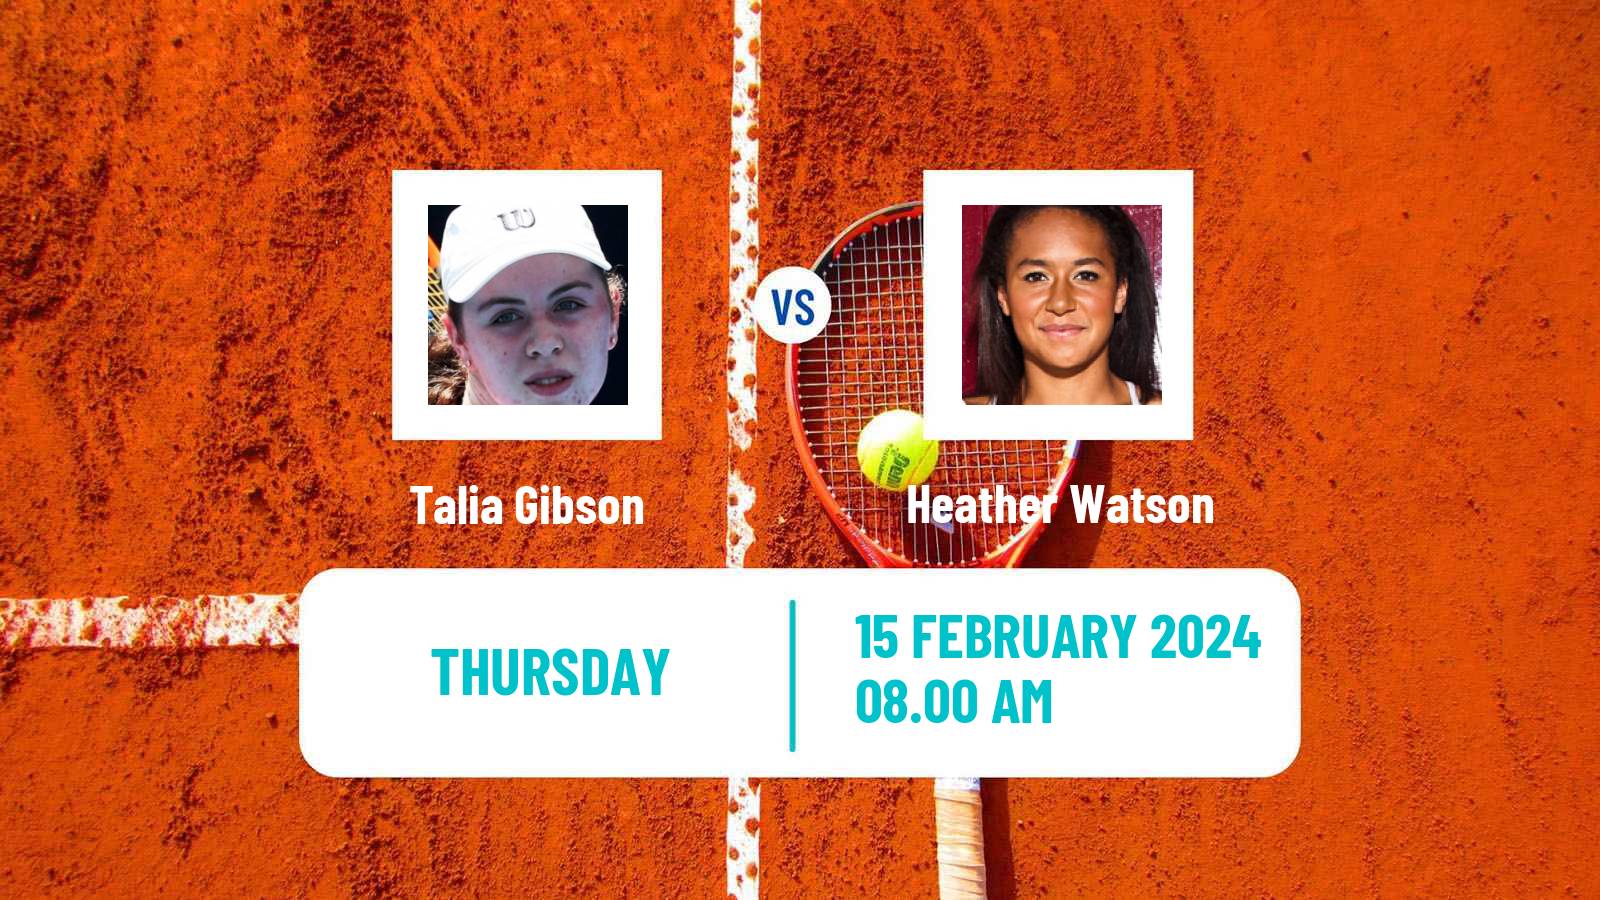 Tennis ITF W50 Roehampton Women Talia Gibson - Heather Watson